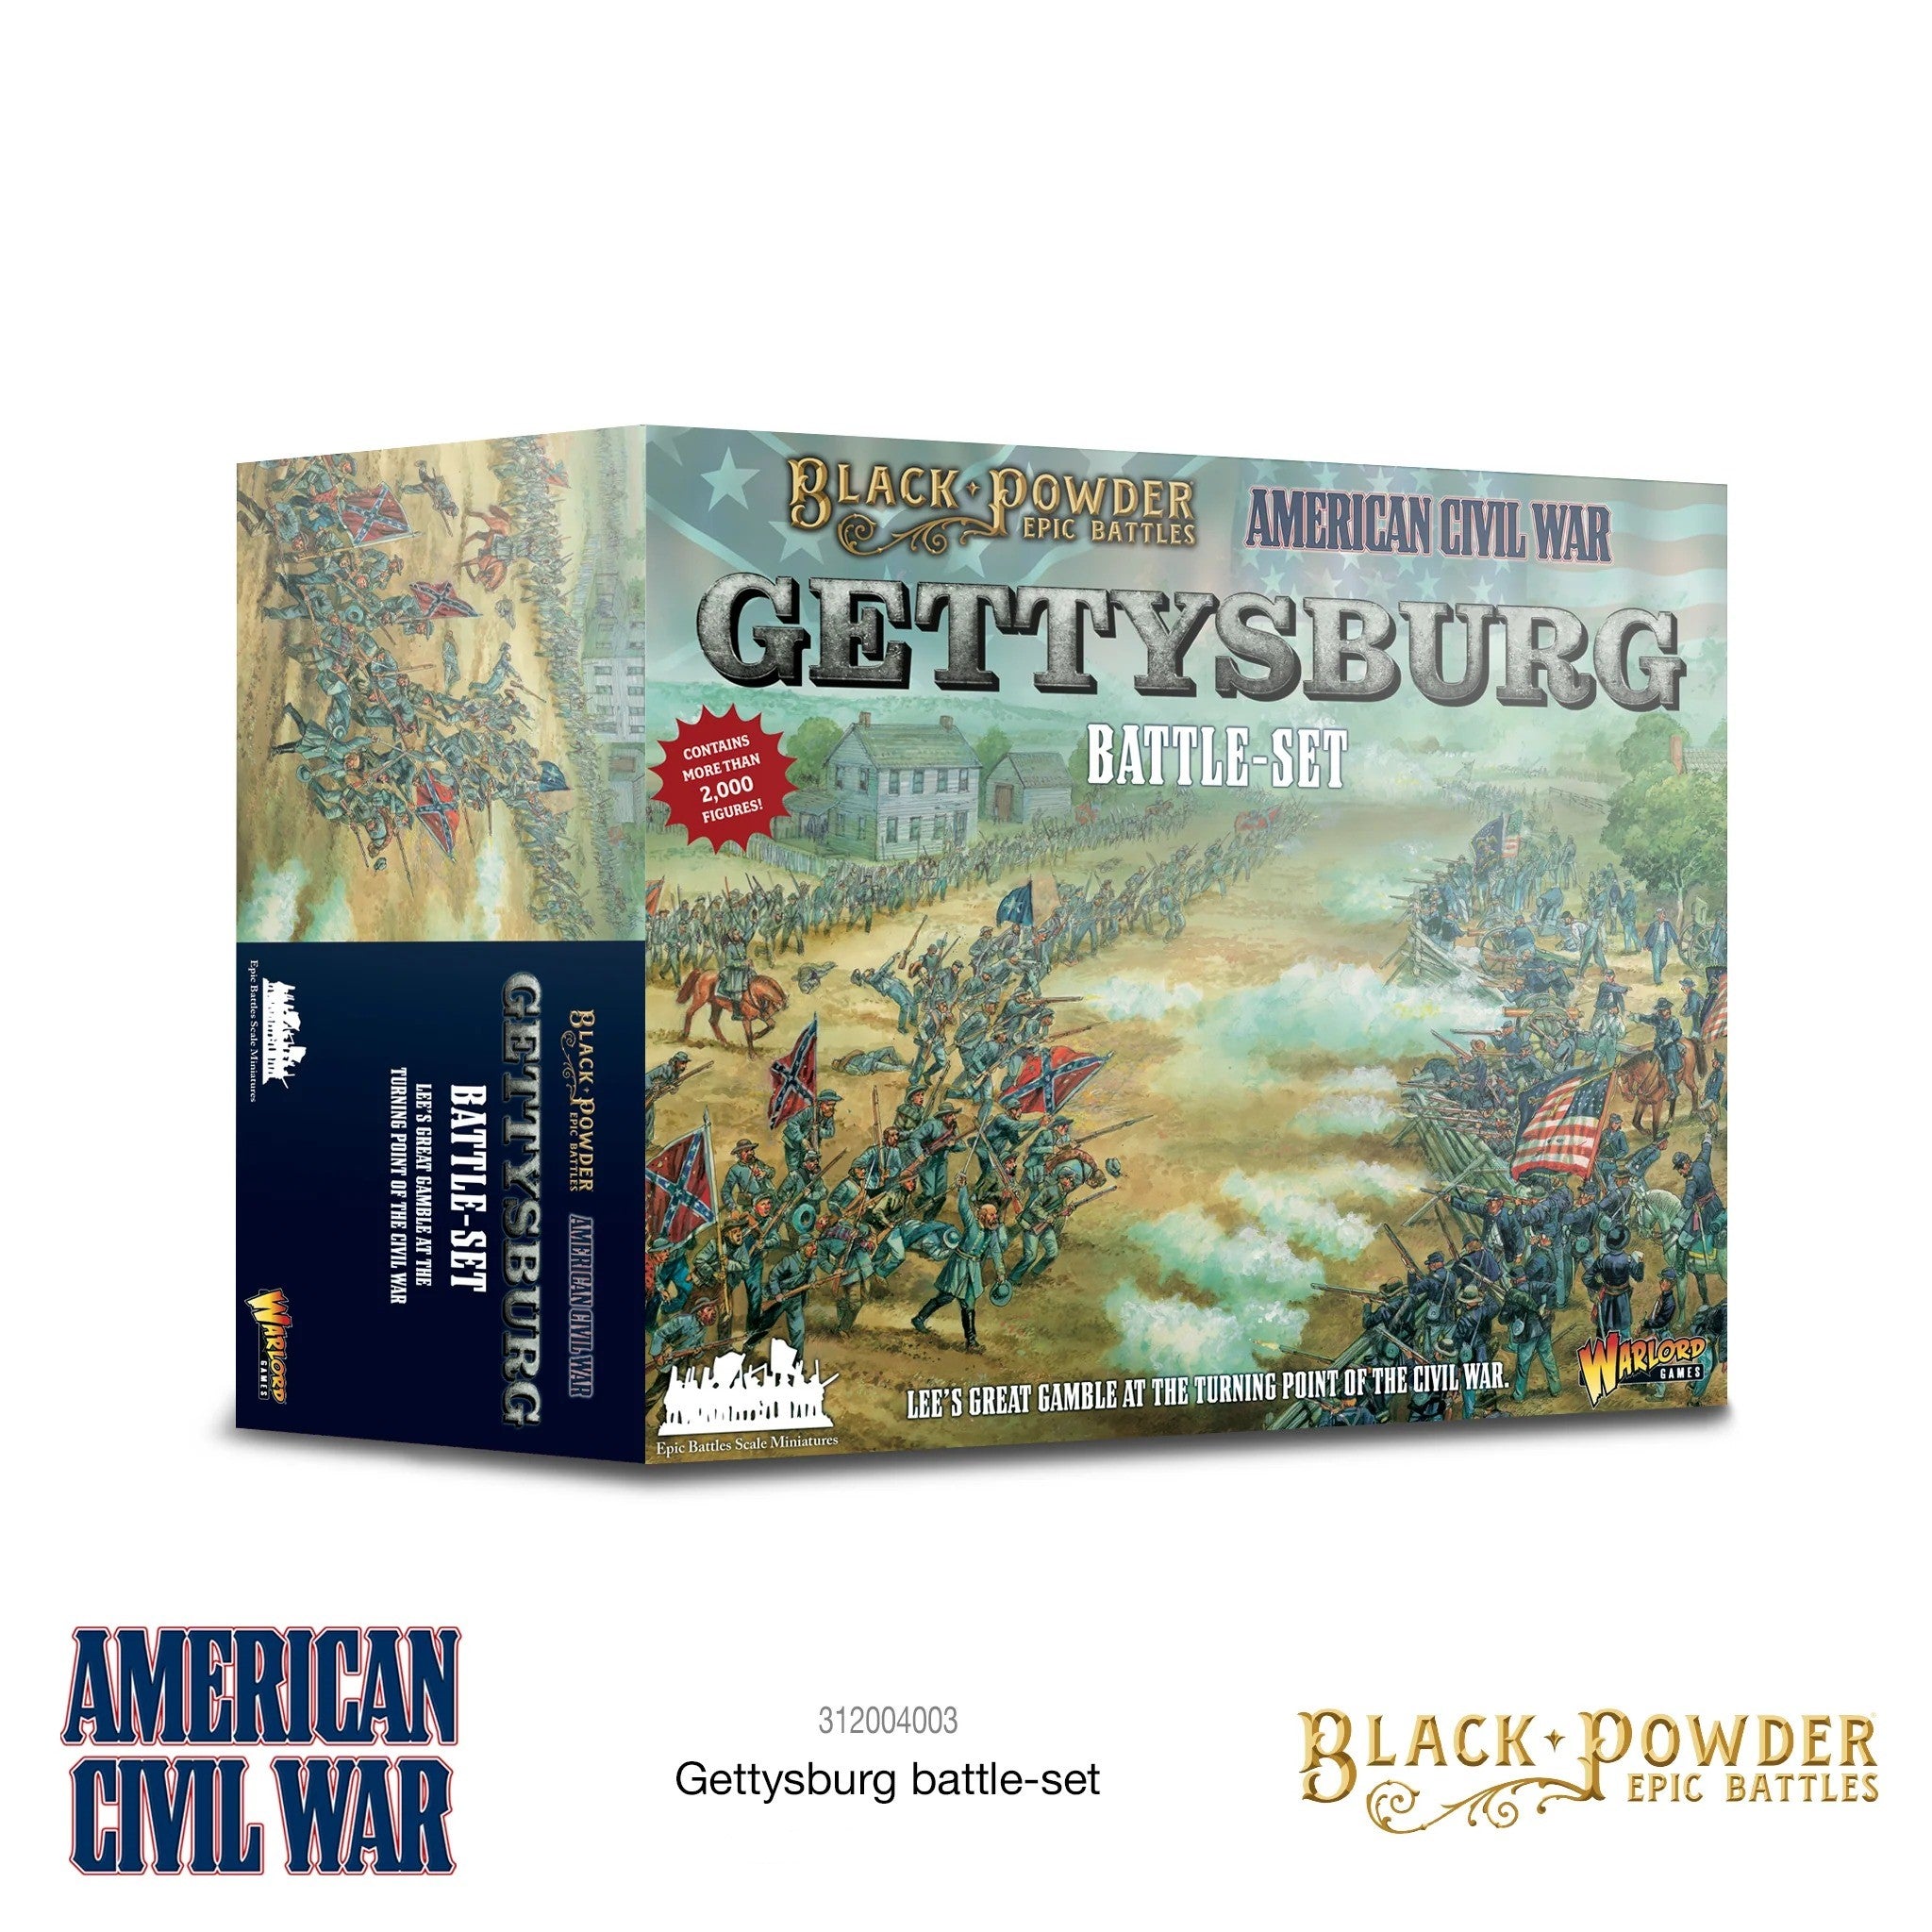 Black Powder Epic Battles - American Civil War: Guts & Glory Starter S –  Wargames Delivered - ACW, American Civil War, Black Powder, Black Powder  Epic Battles Civil War*, Epic ACW, Historical